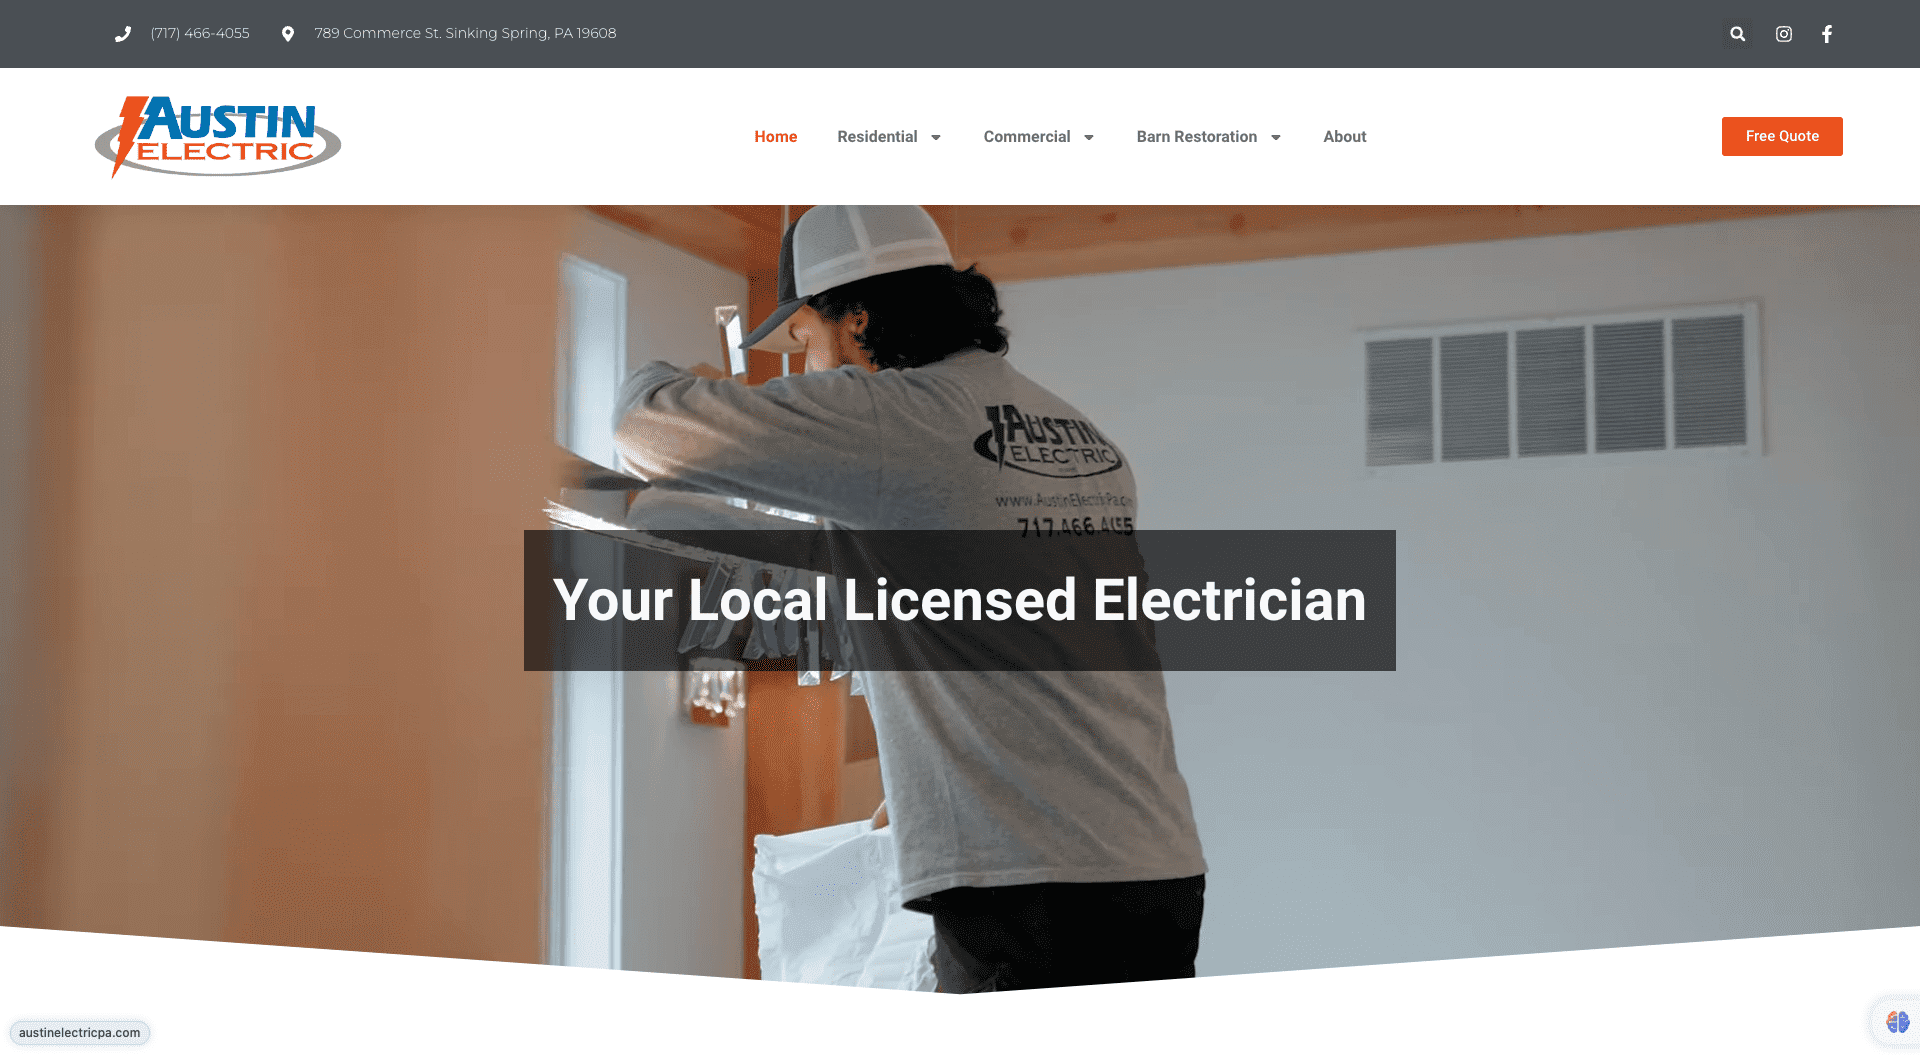 Homepage screenshot of Austin electric showing a man fixing a light fixture.